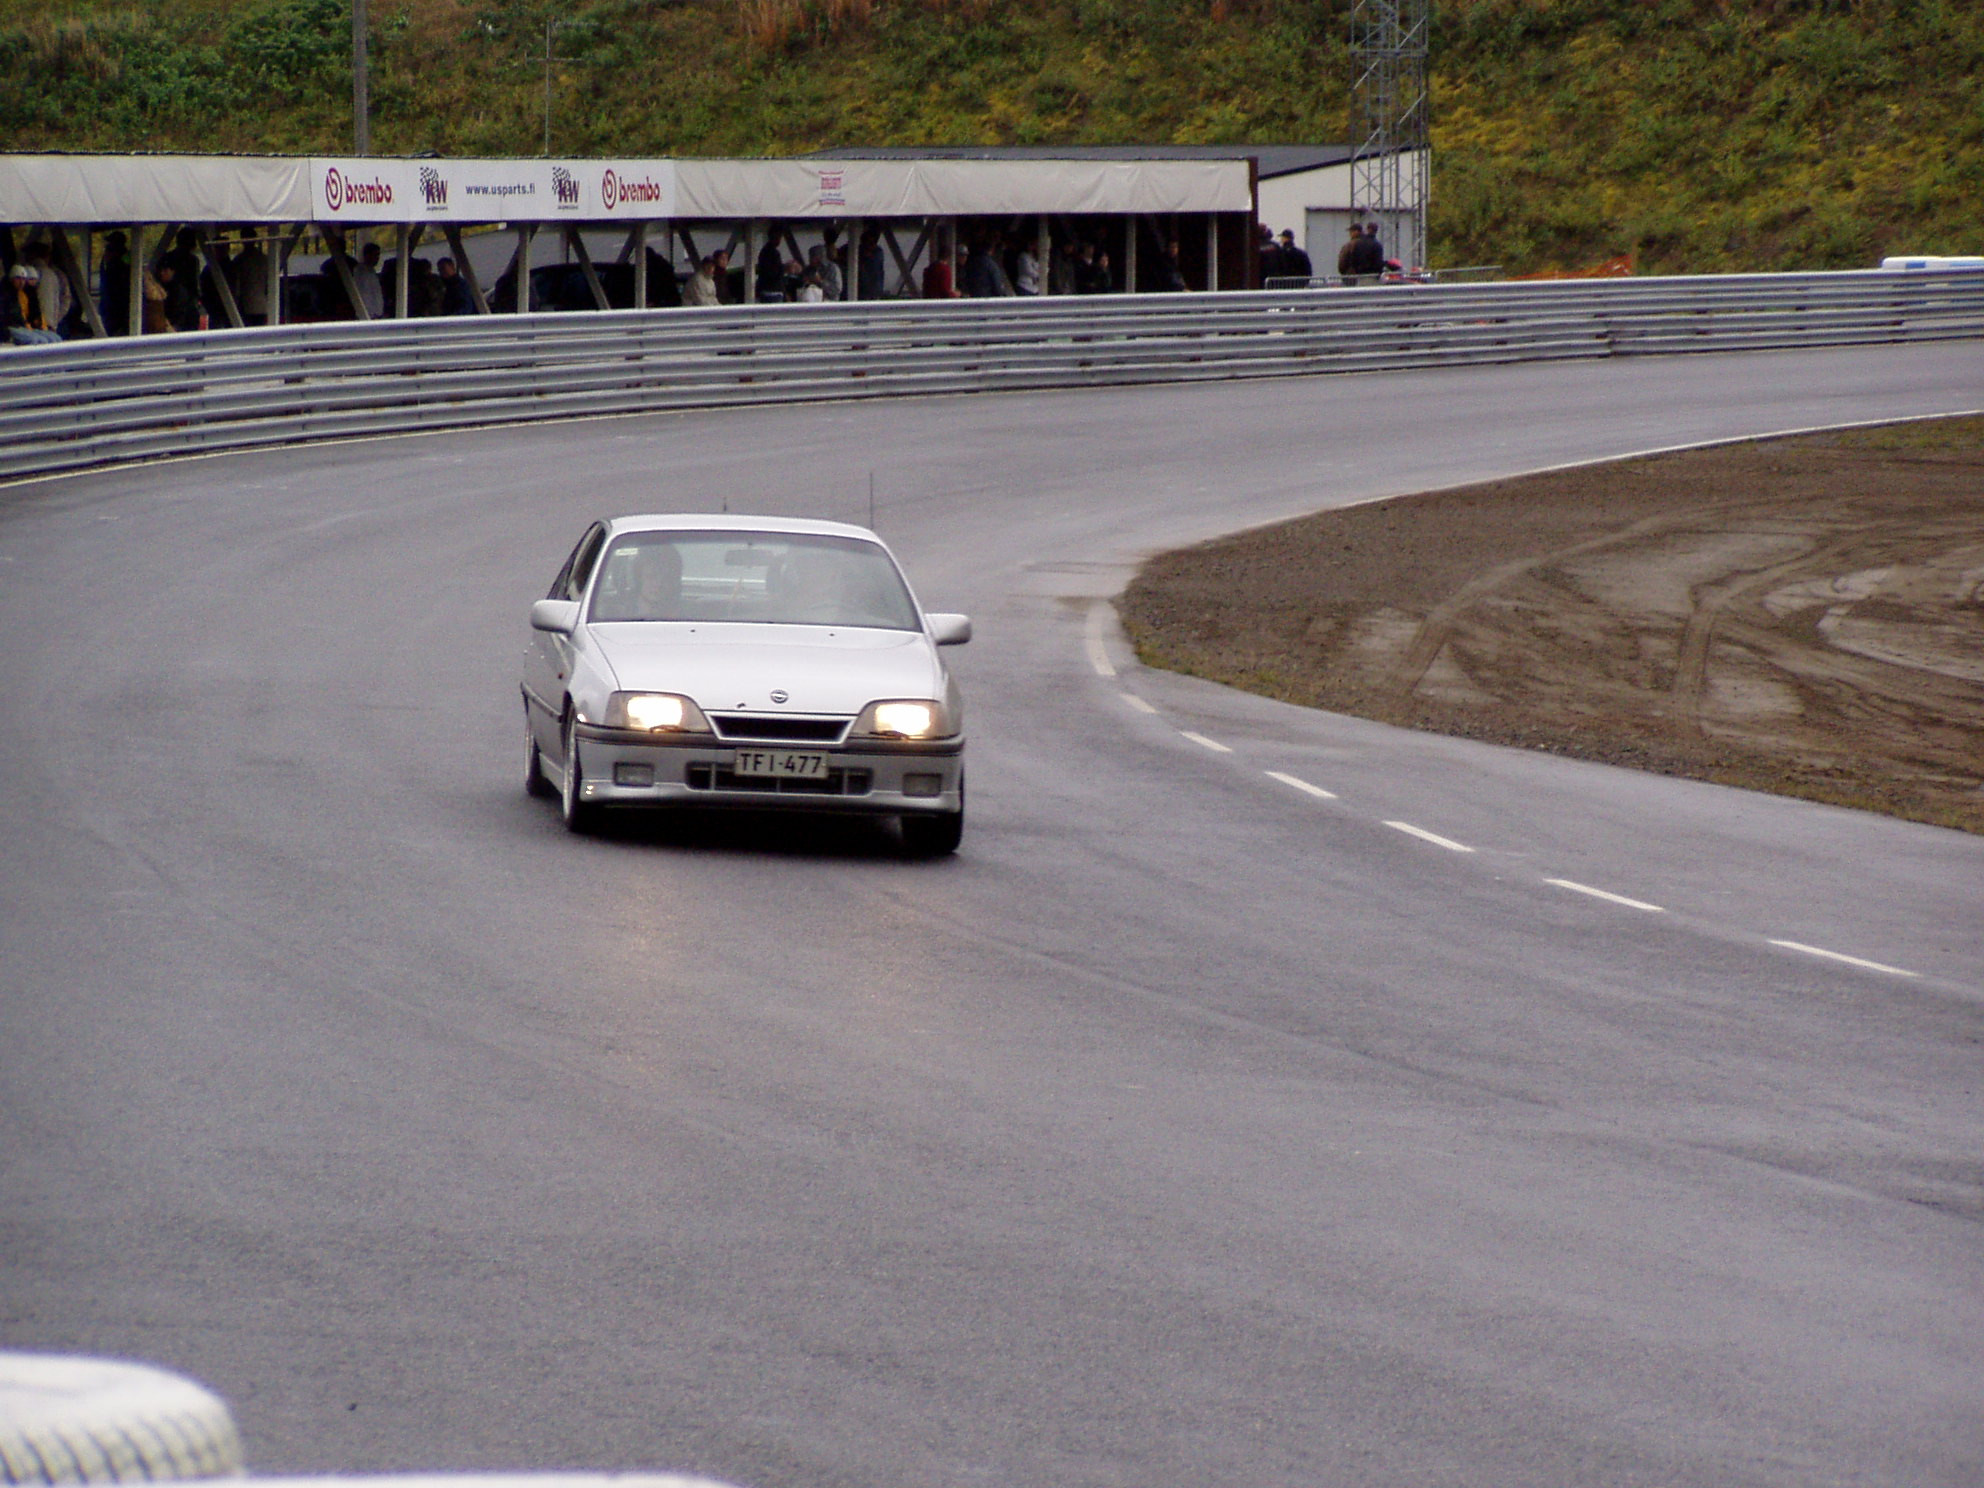 Sunday on racetrack 18.9.2005, Opel Omega